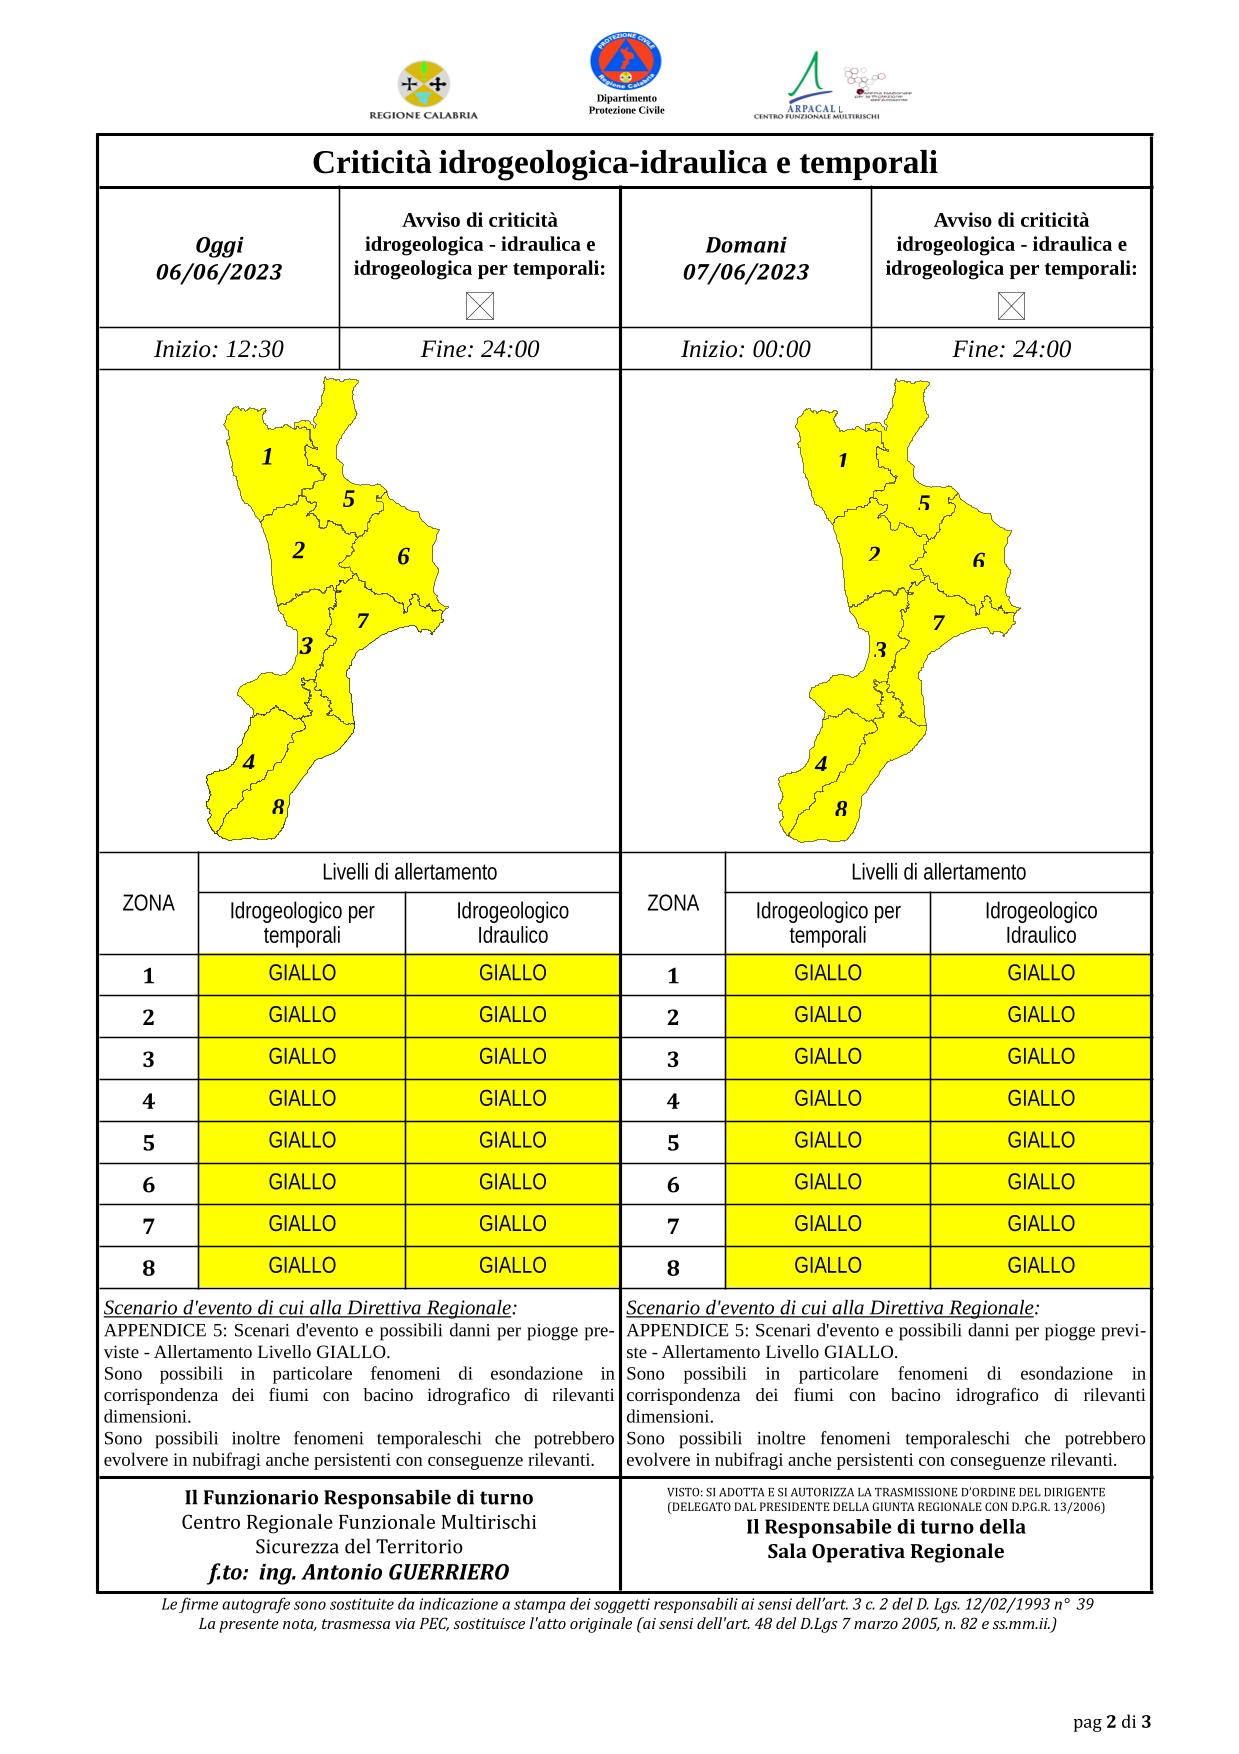 Criticità idrogeologica-idraulica e temporali in Calabria 06-06-2023